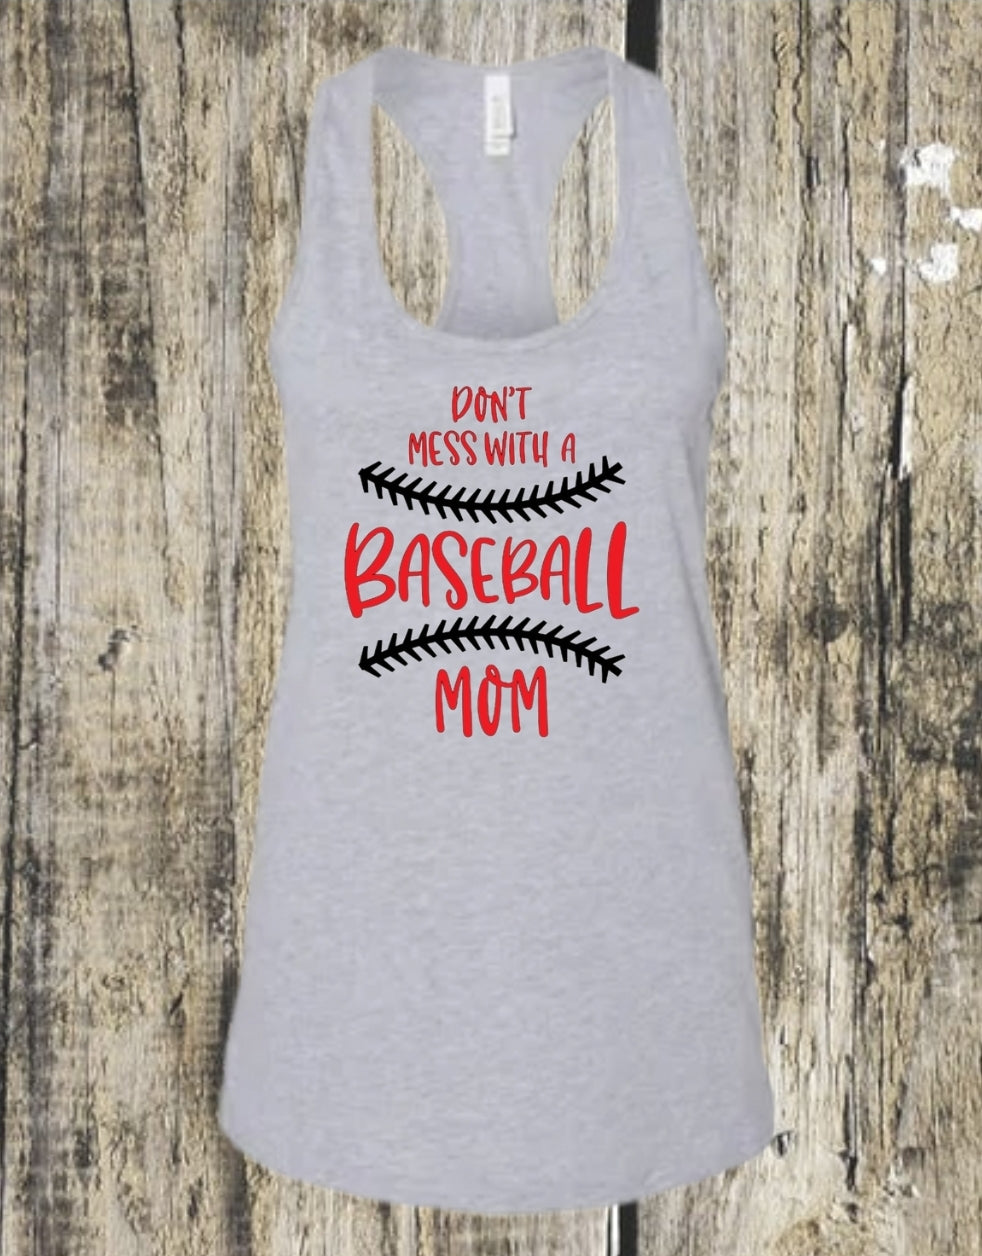 Baseball Mom (#3)